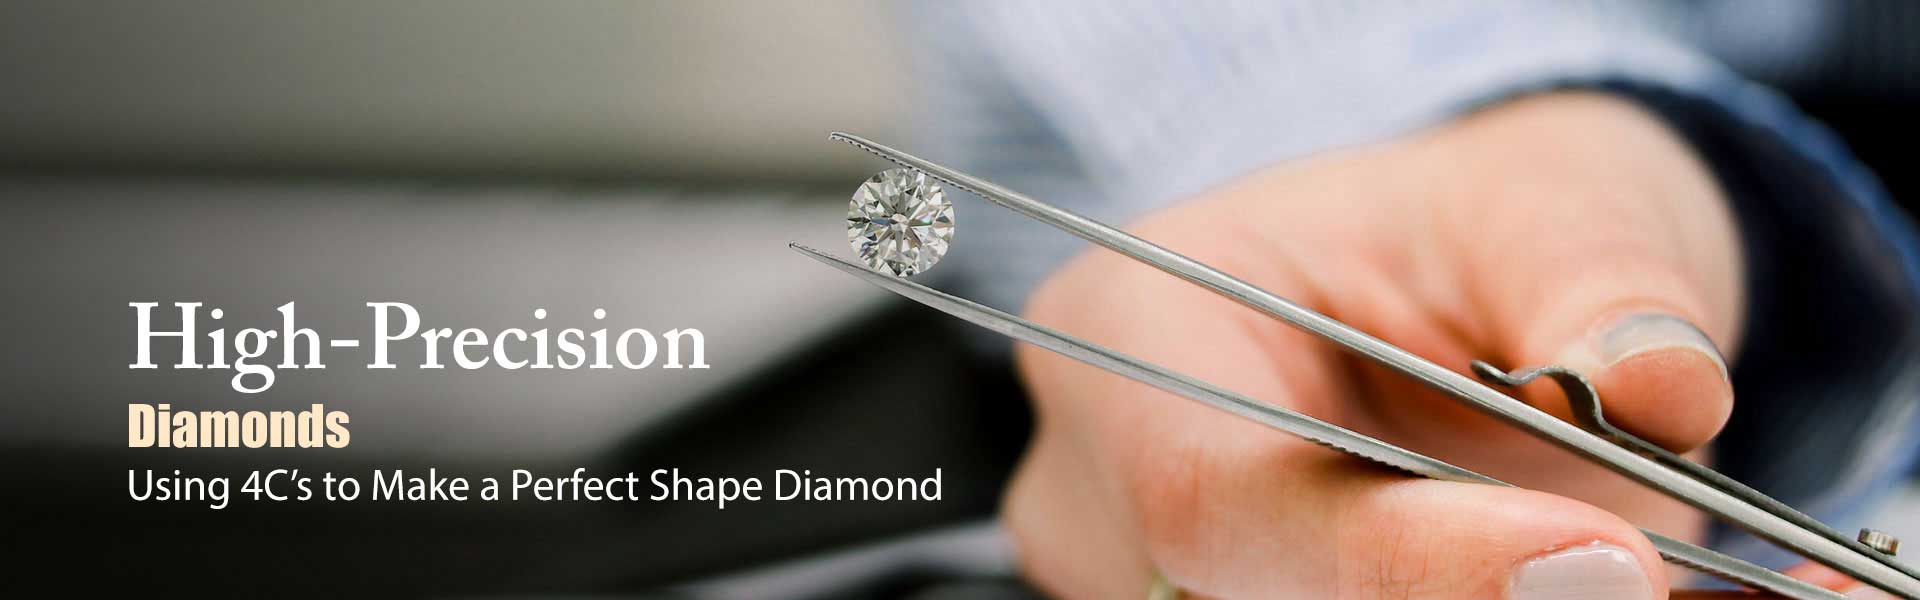  Certified Diamond  Manufacturers in Geneva